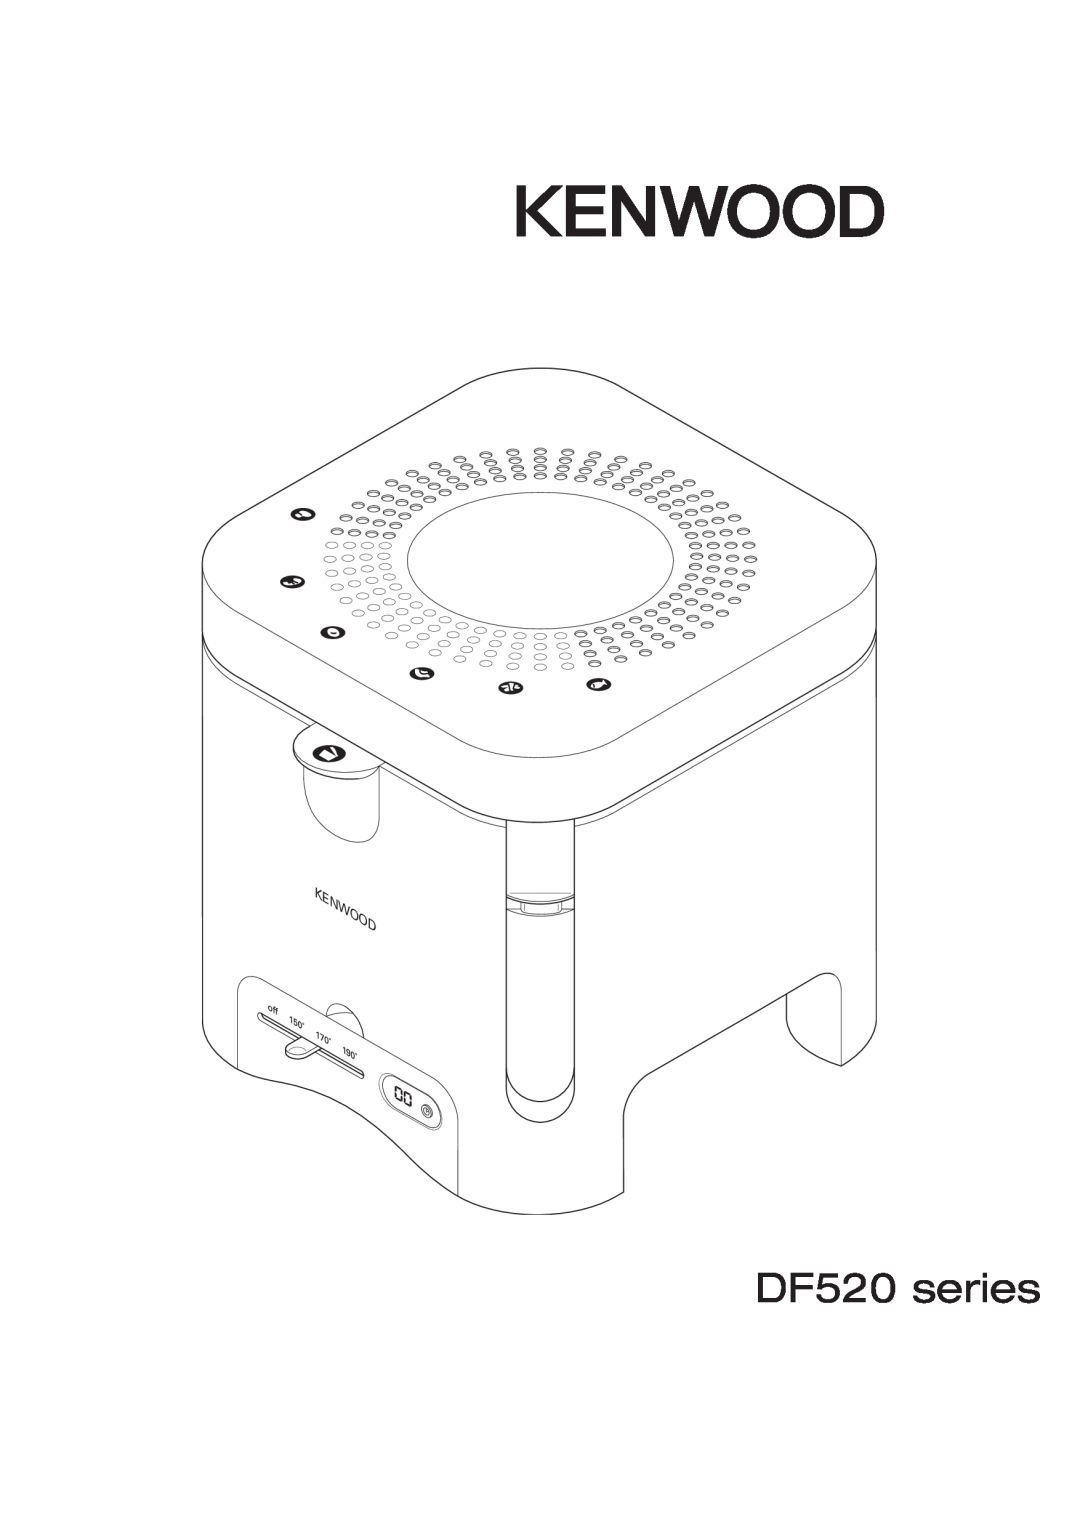 Kenwood manual DF520 series 